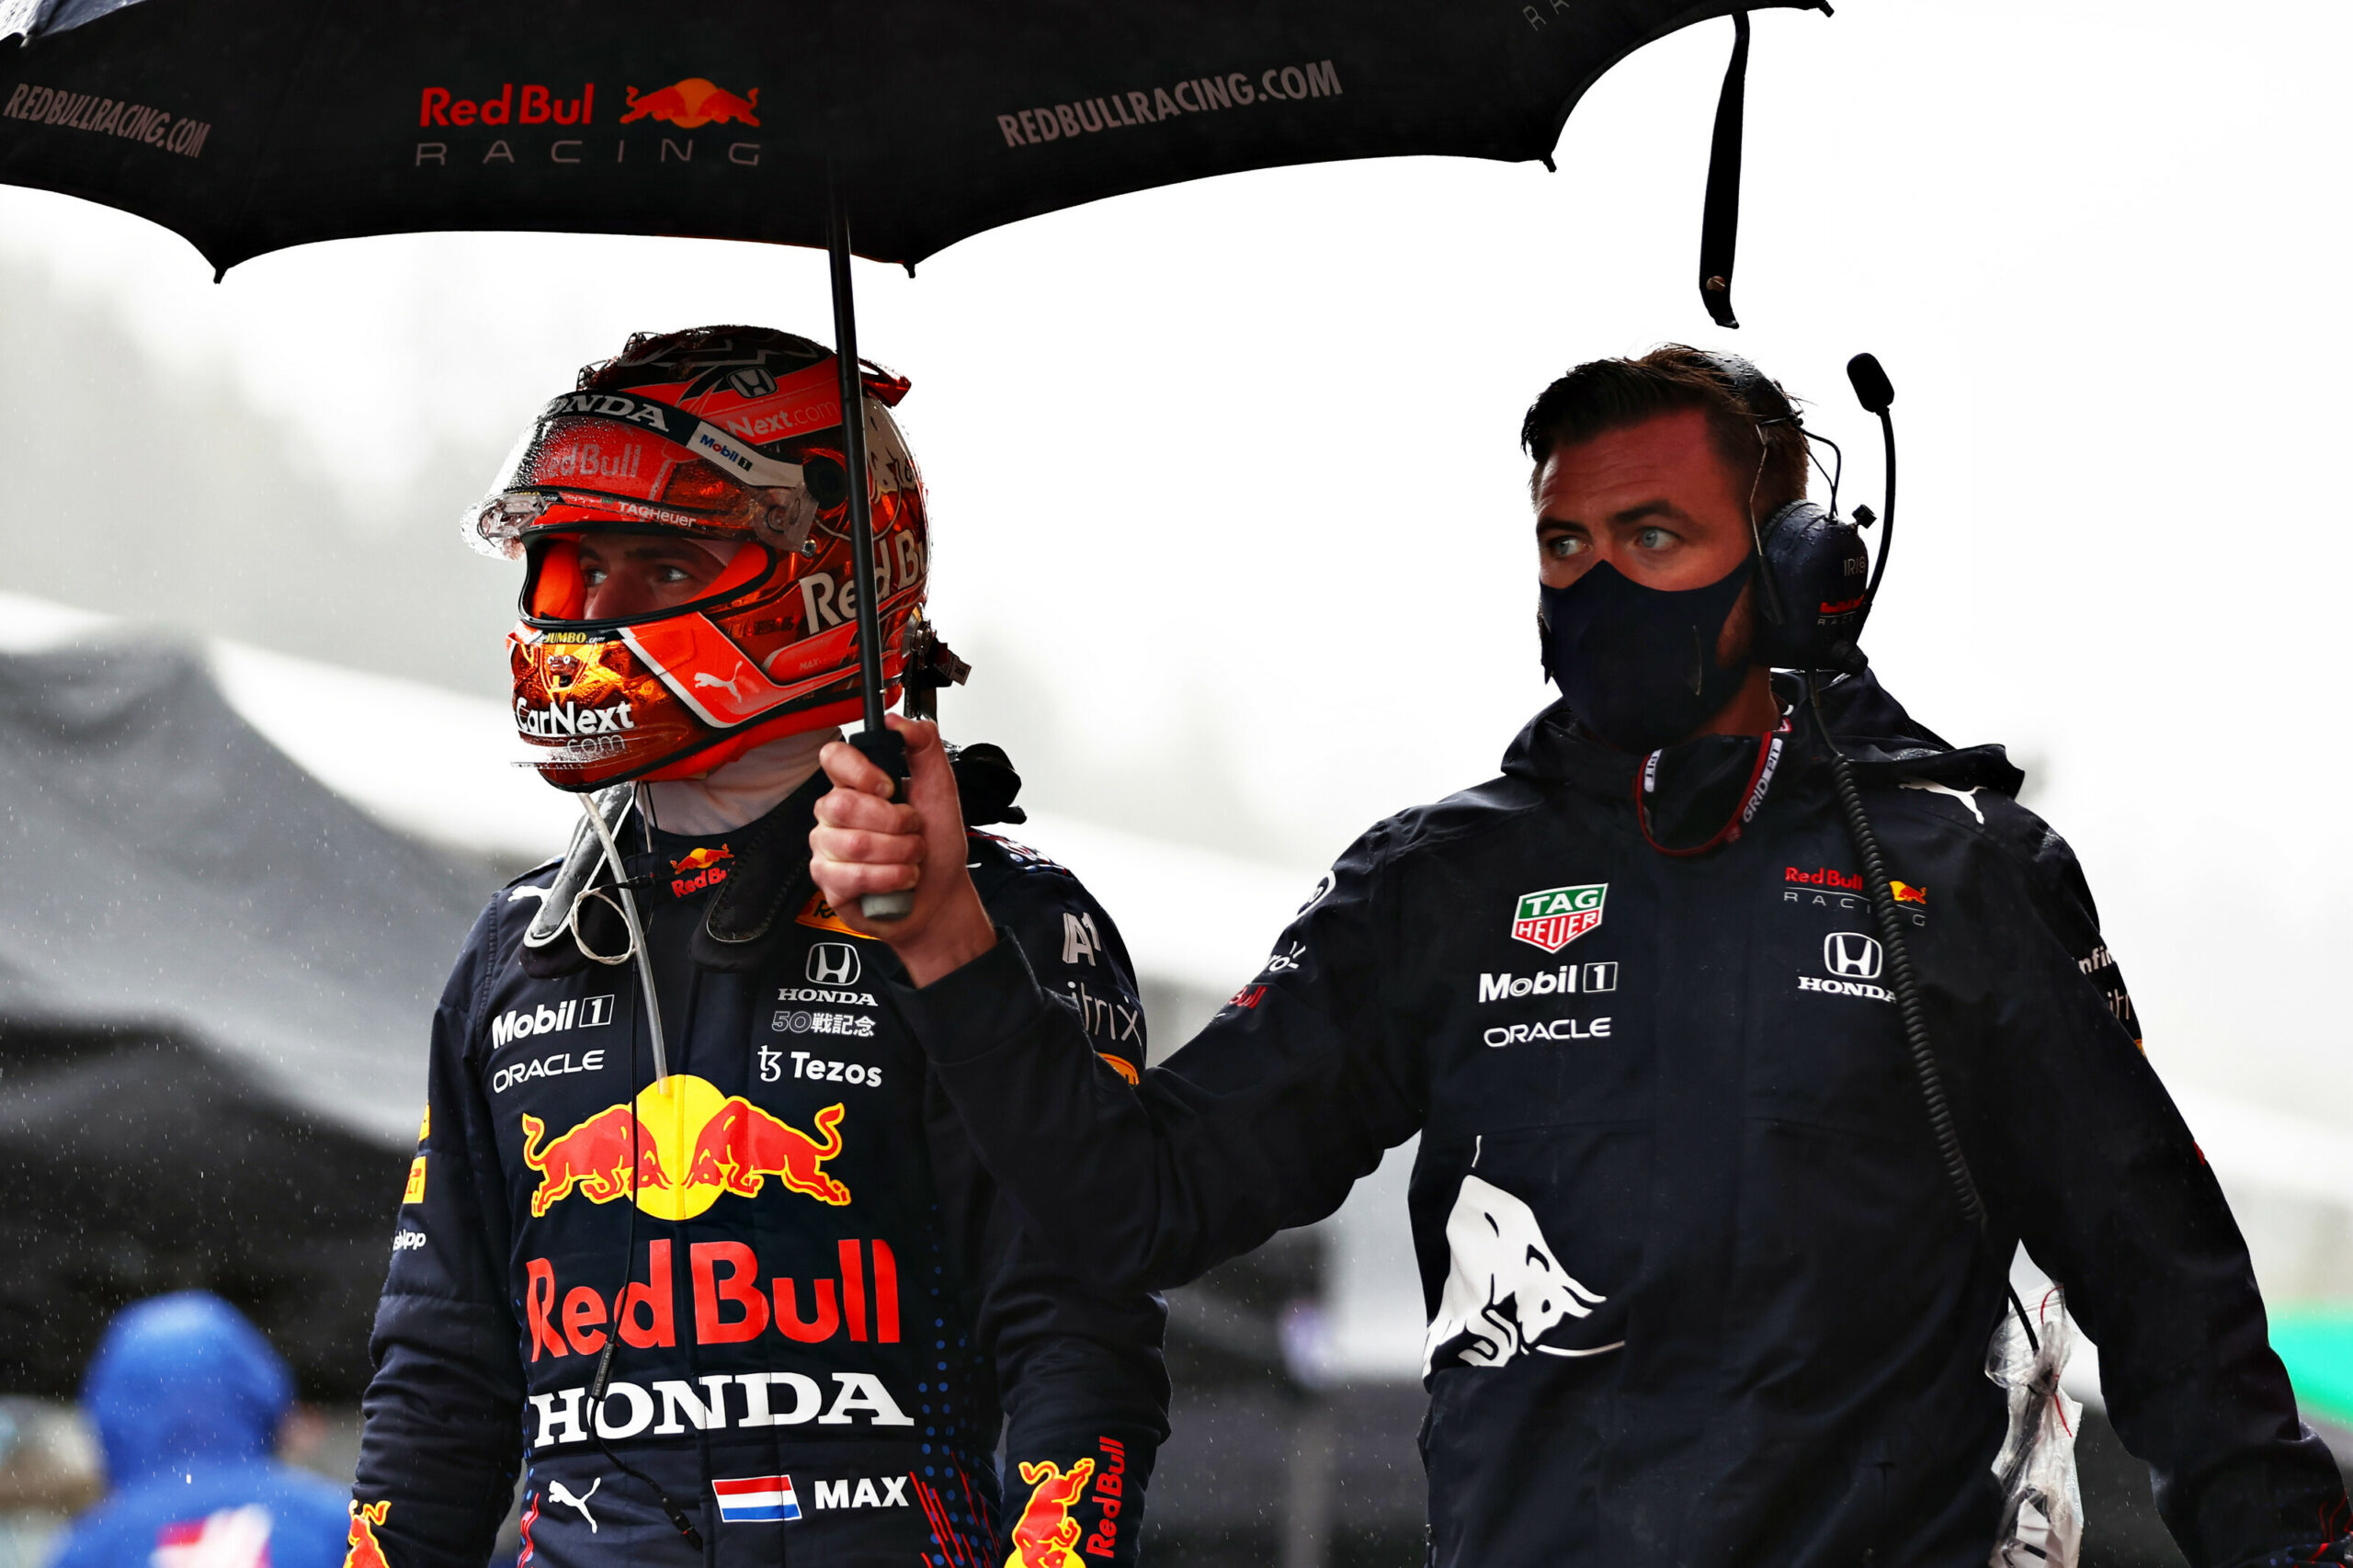 F1 - Max Verstappen : "Nous avions besoin de ce résultat"